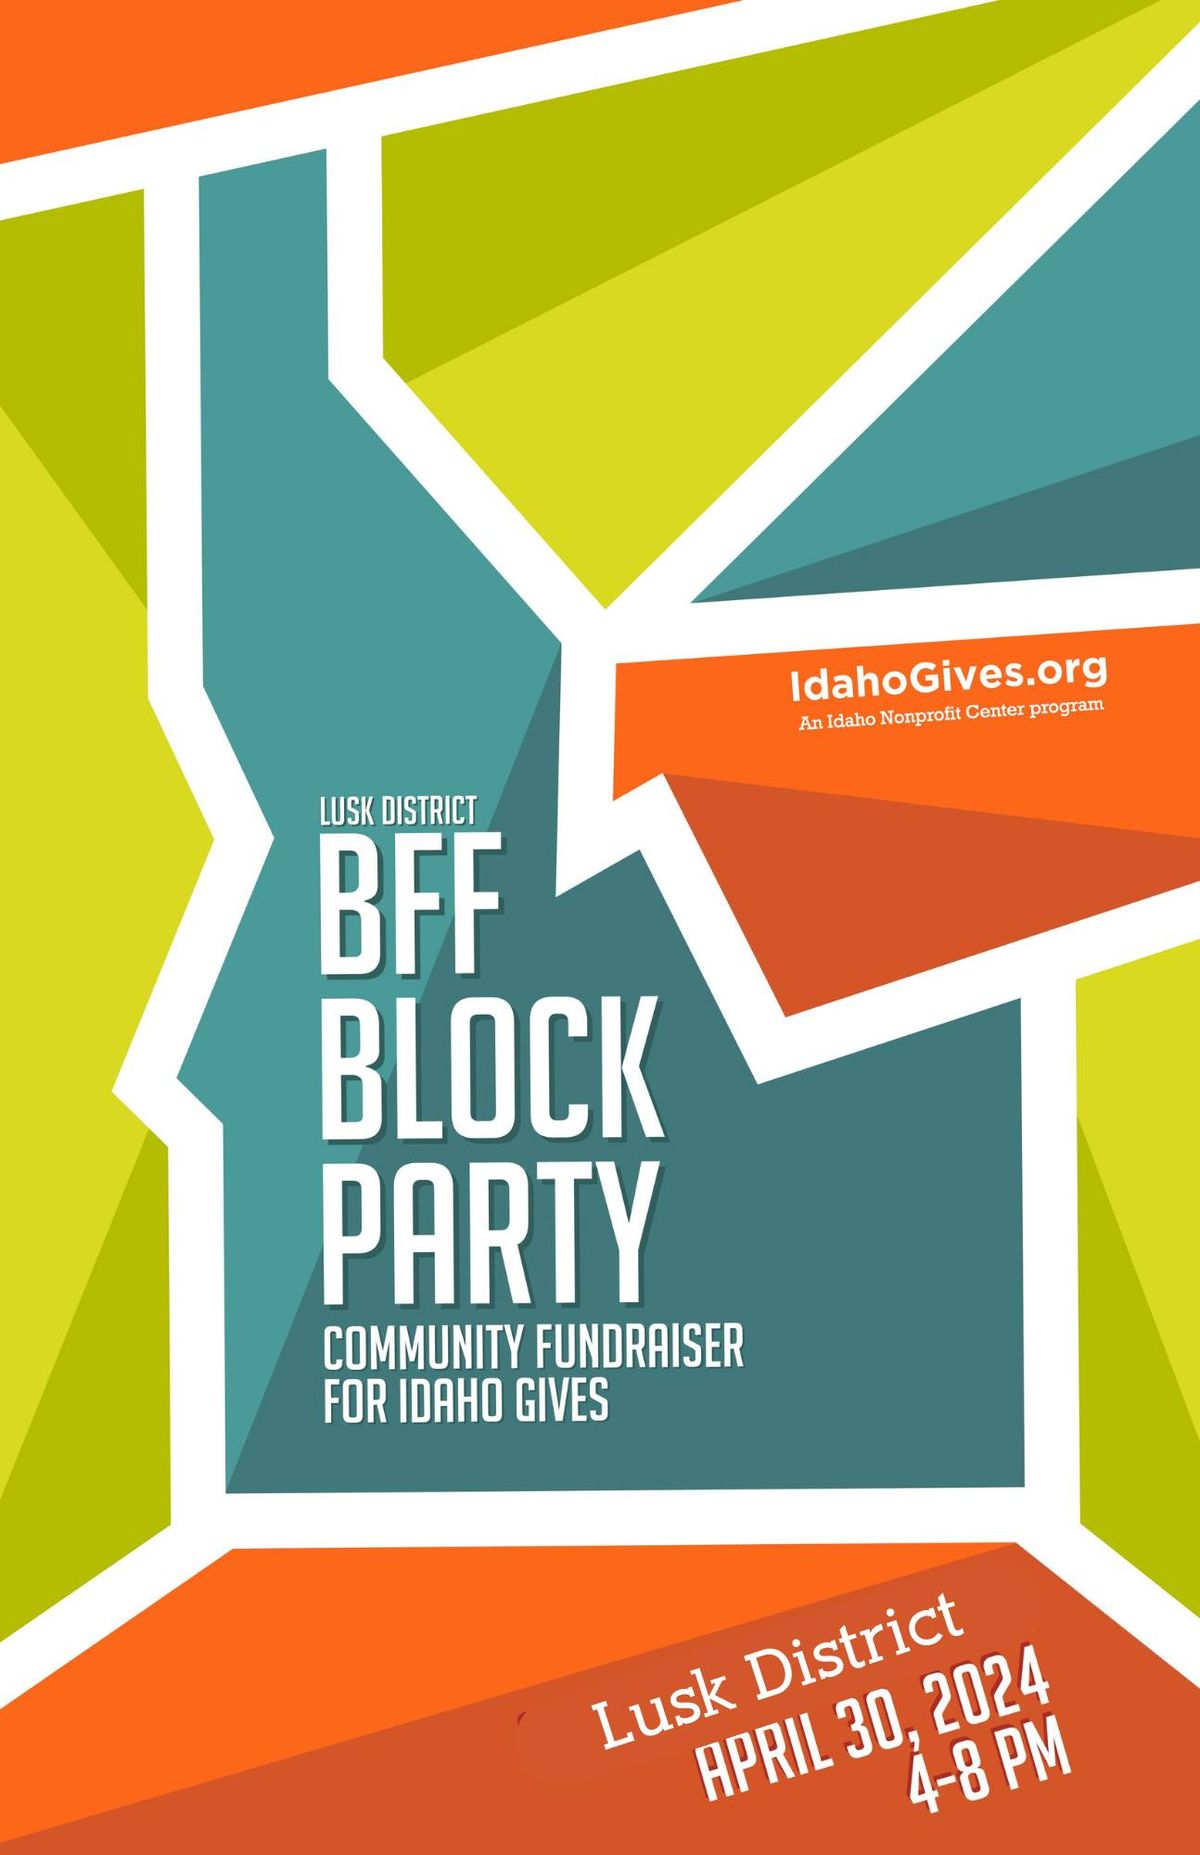 BFF Block Party- Idaho Gives kickoff community event